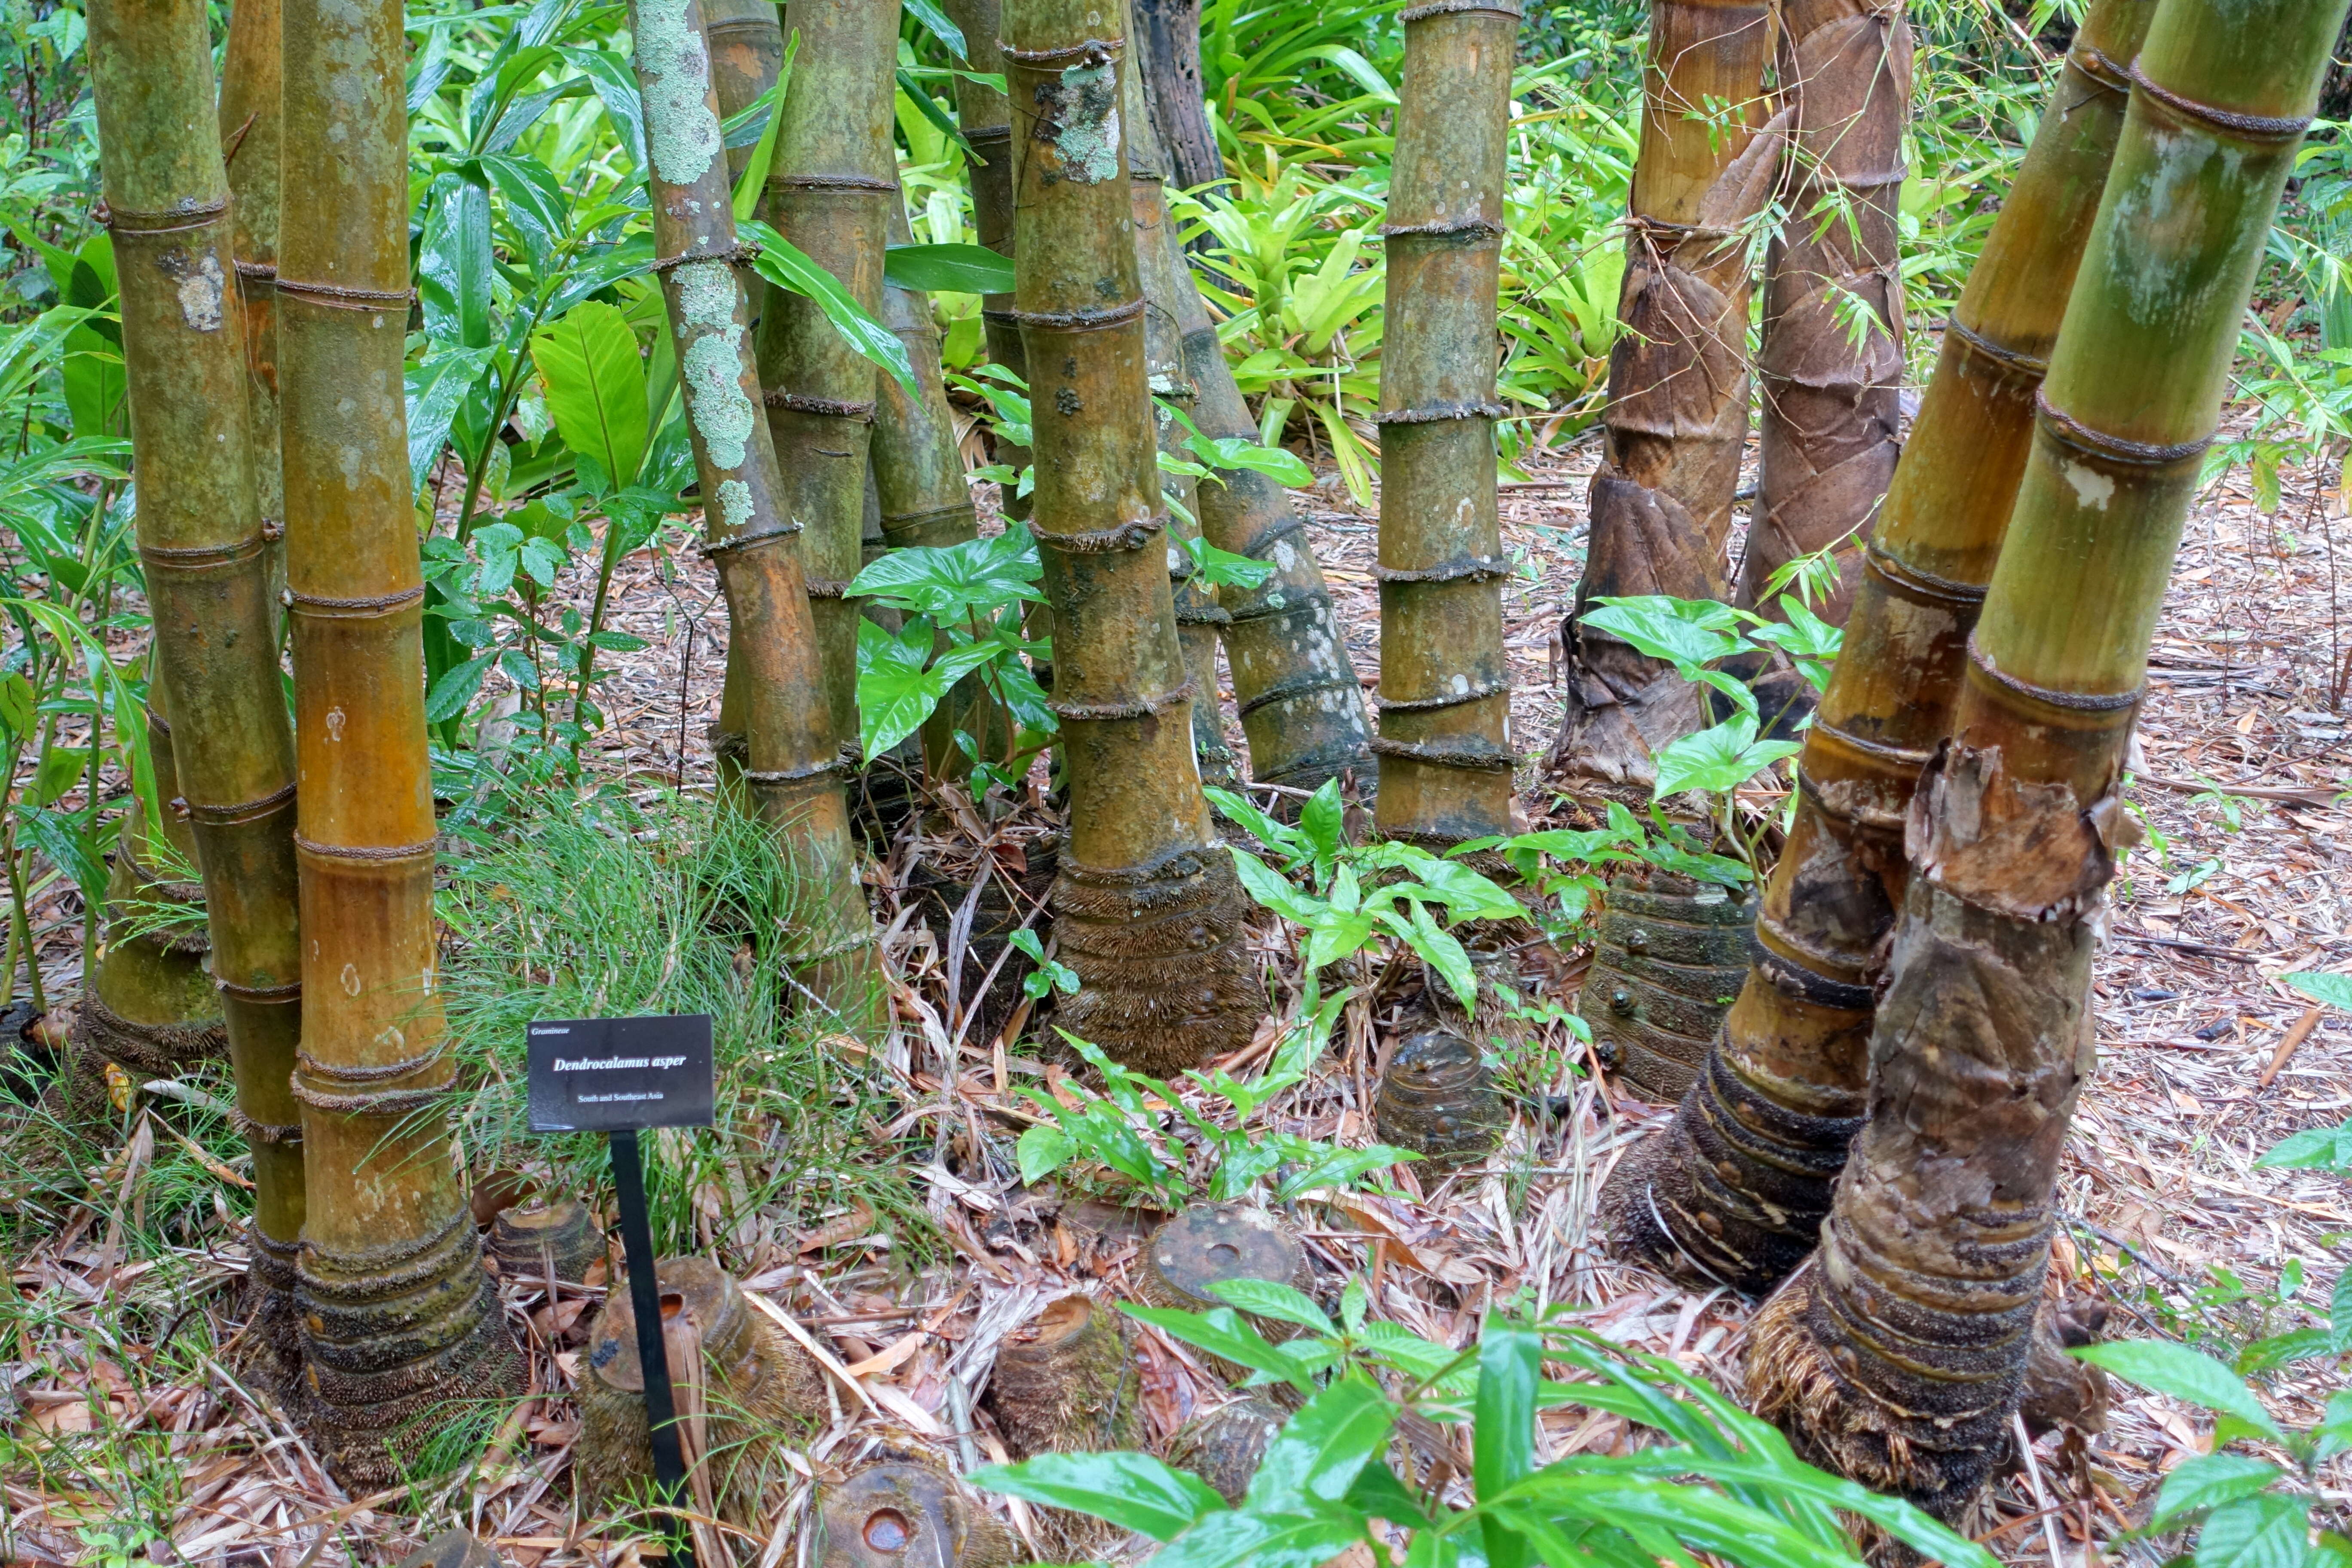 Image of giant bamboo